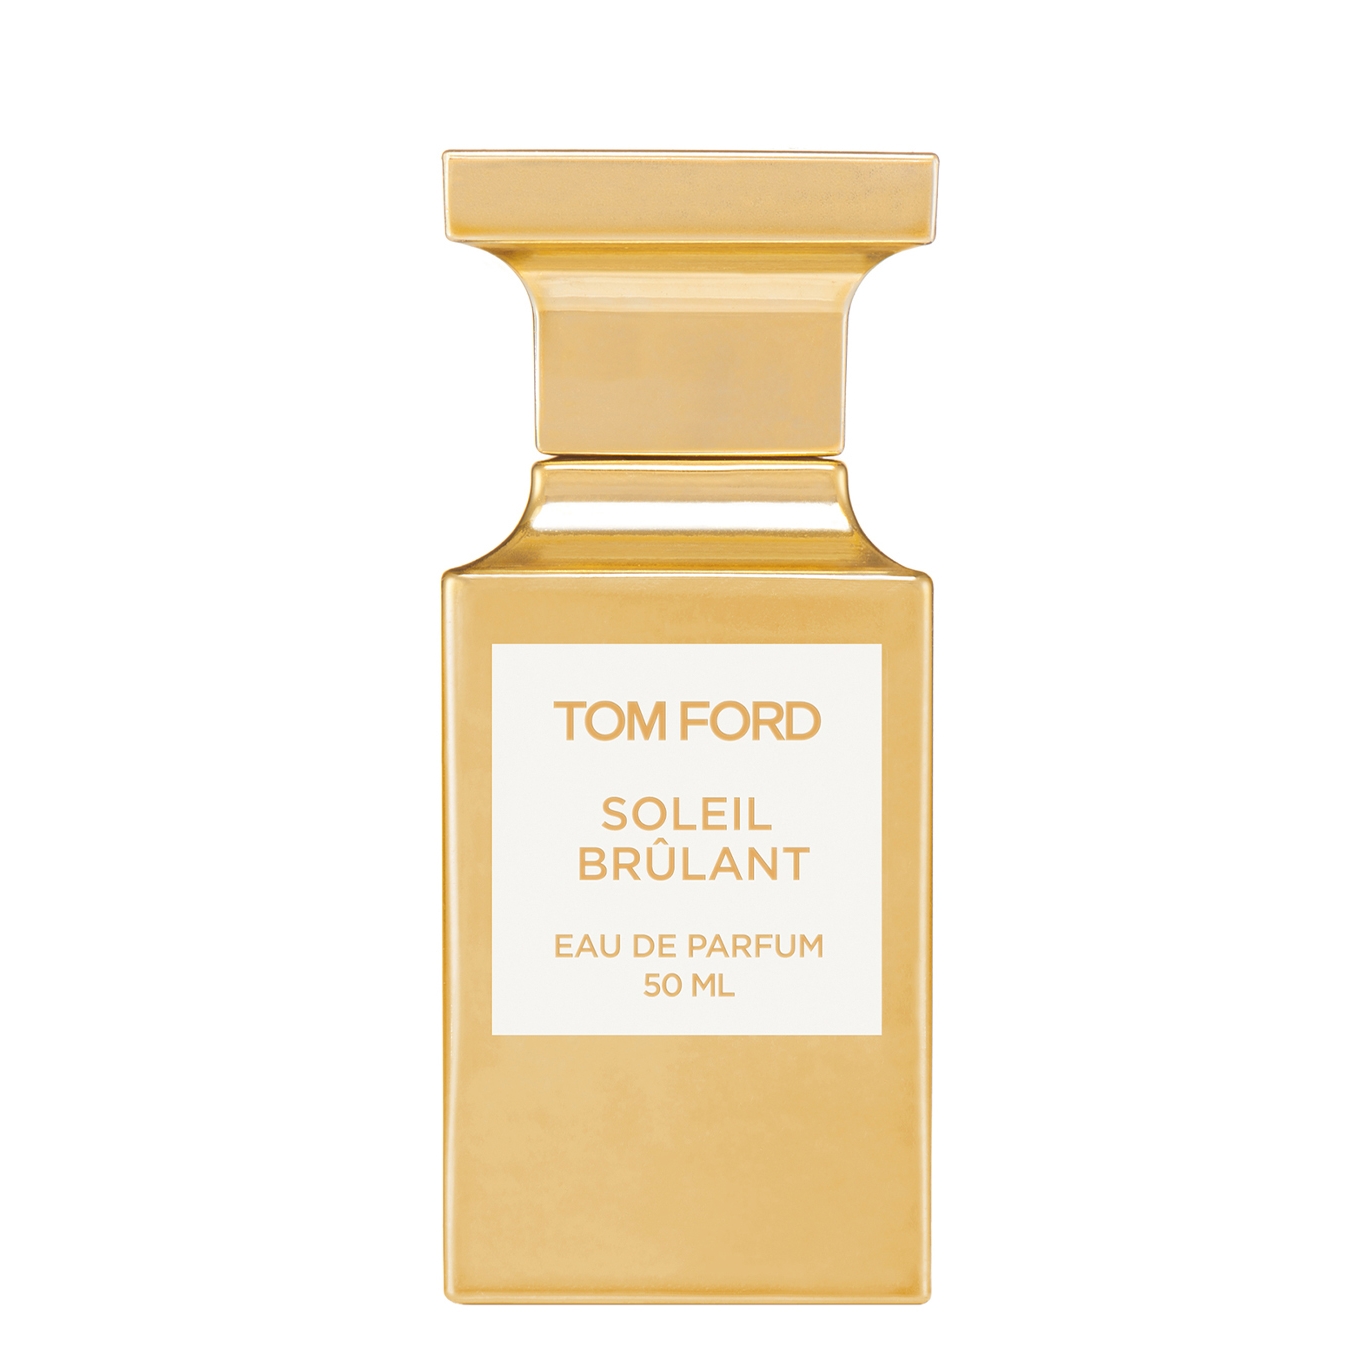 Tom Ford Soleil Brûlant 50ml, Perfume, Mandarin